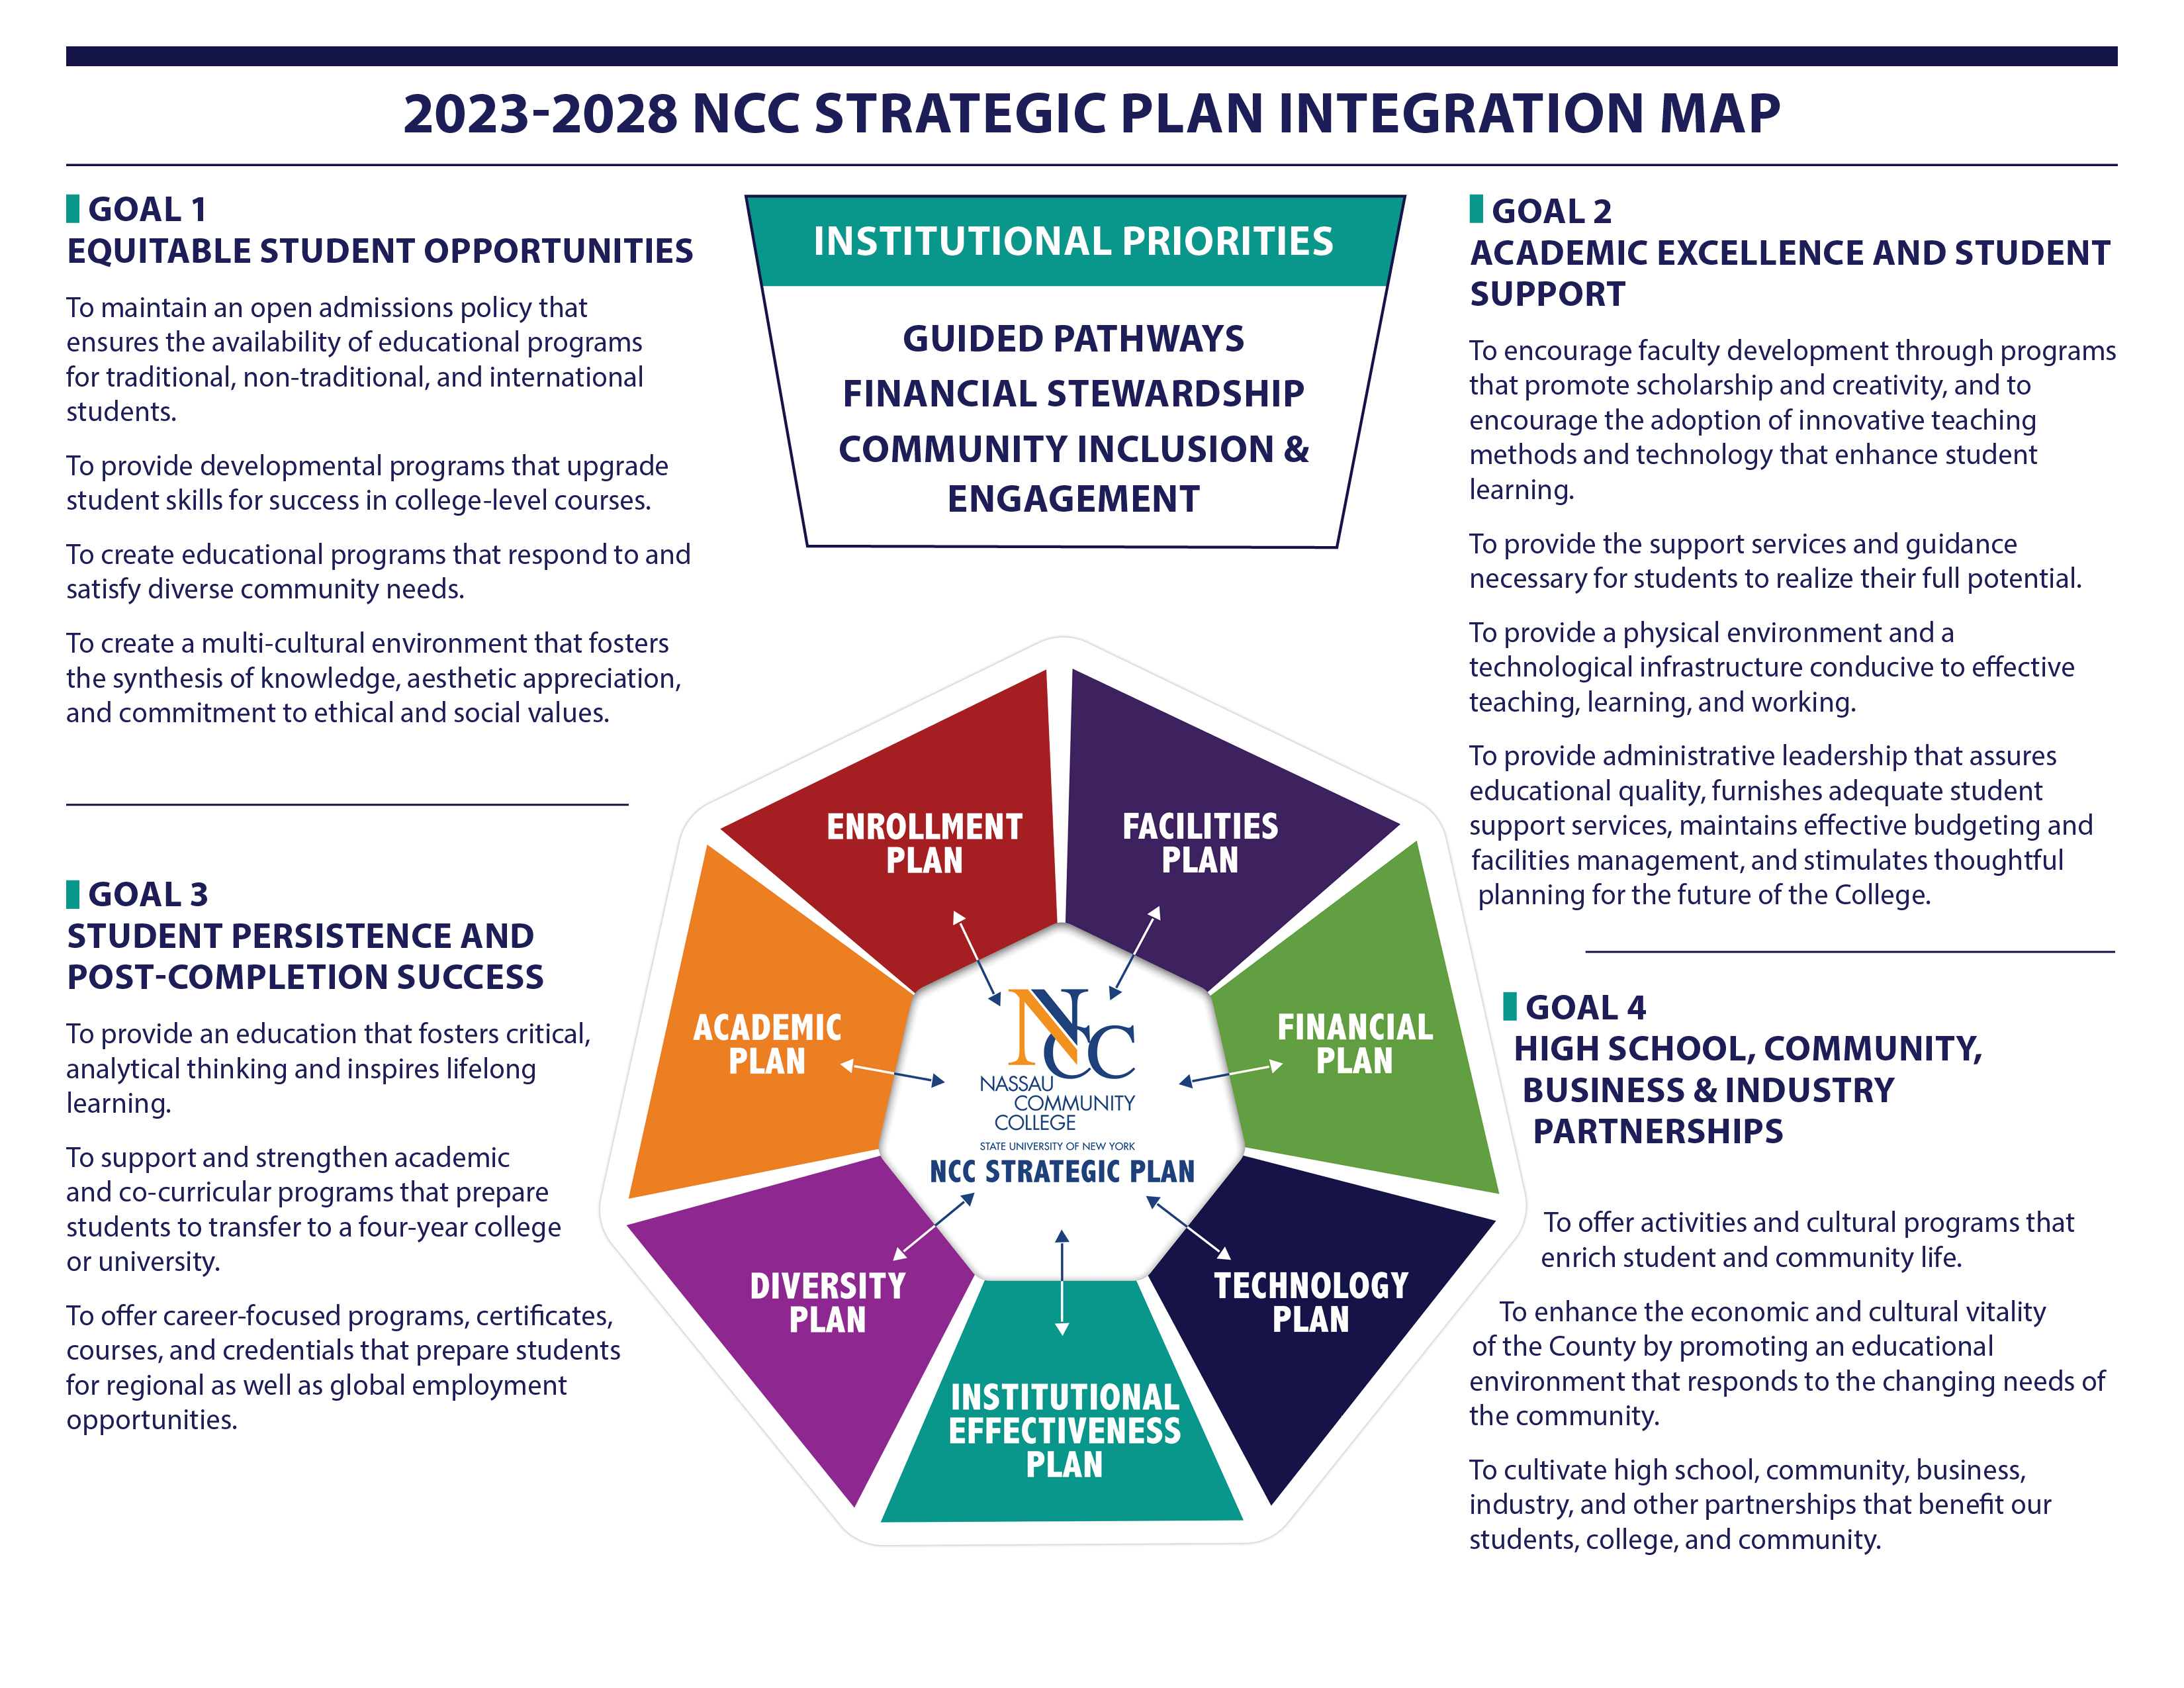 Strategic Plan Integration Map